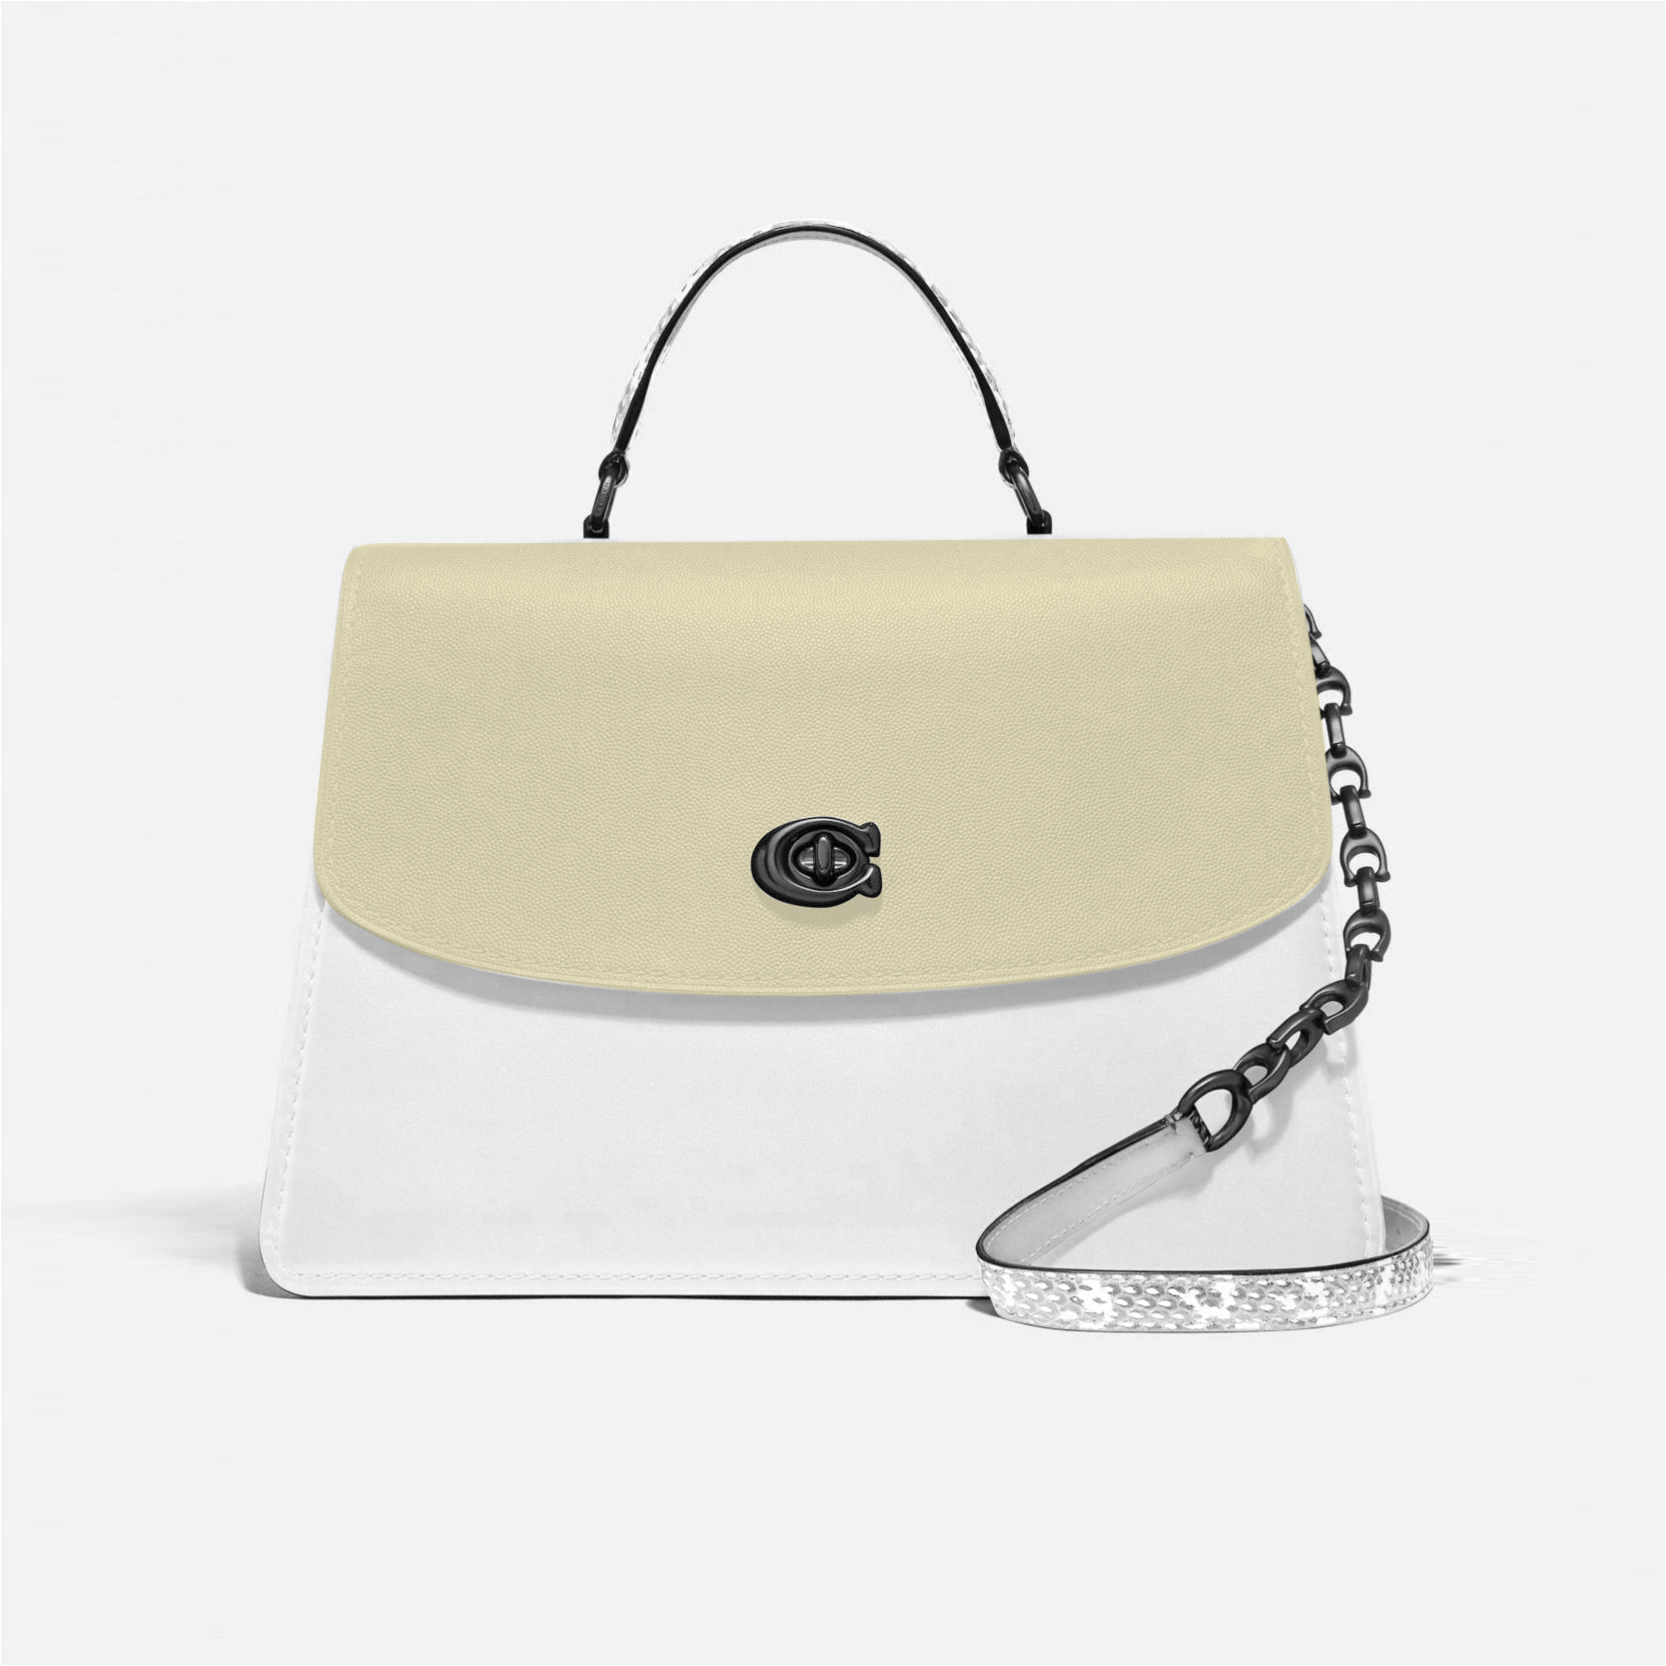 2020 new fashion designer grain leather handbags